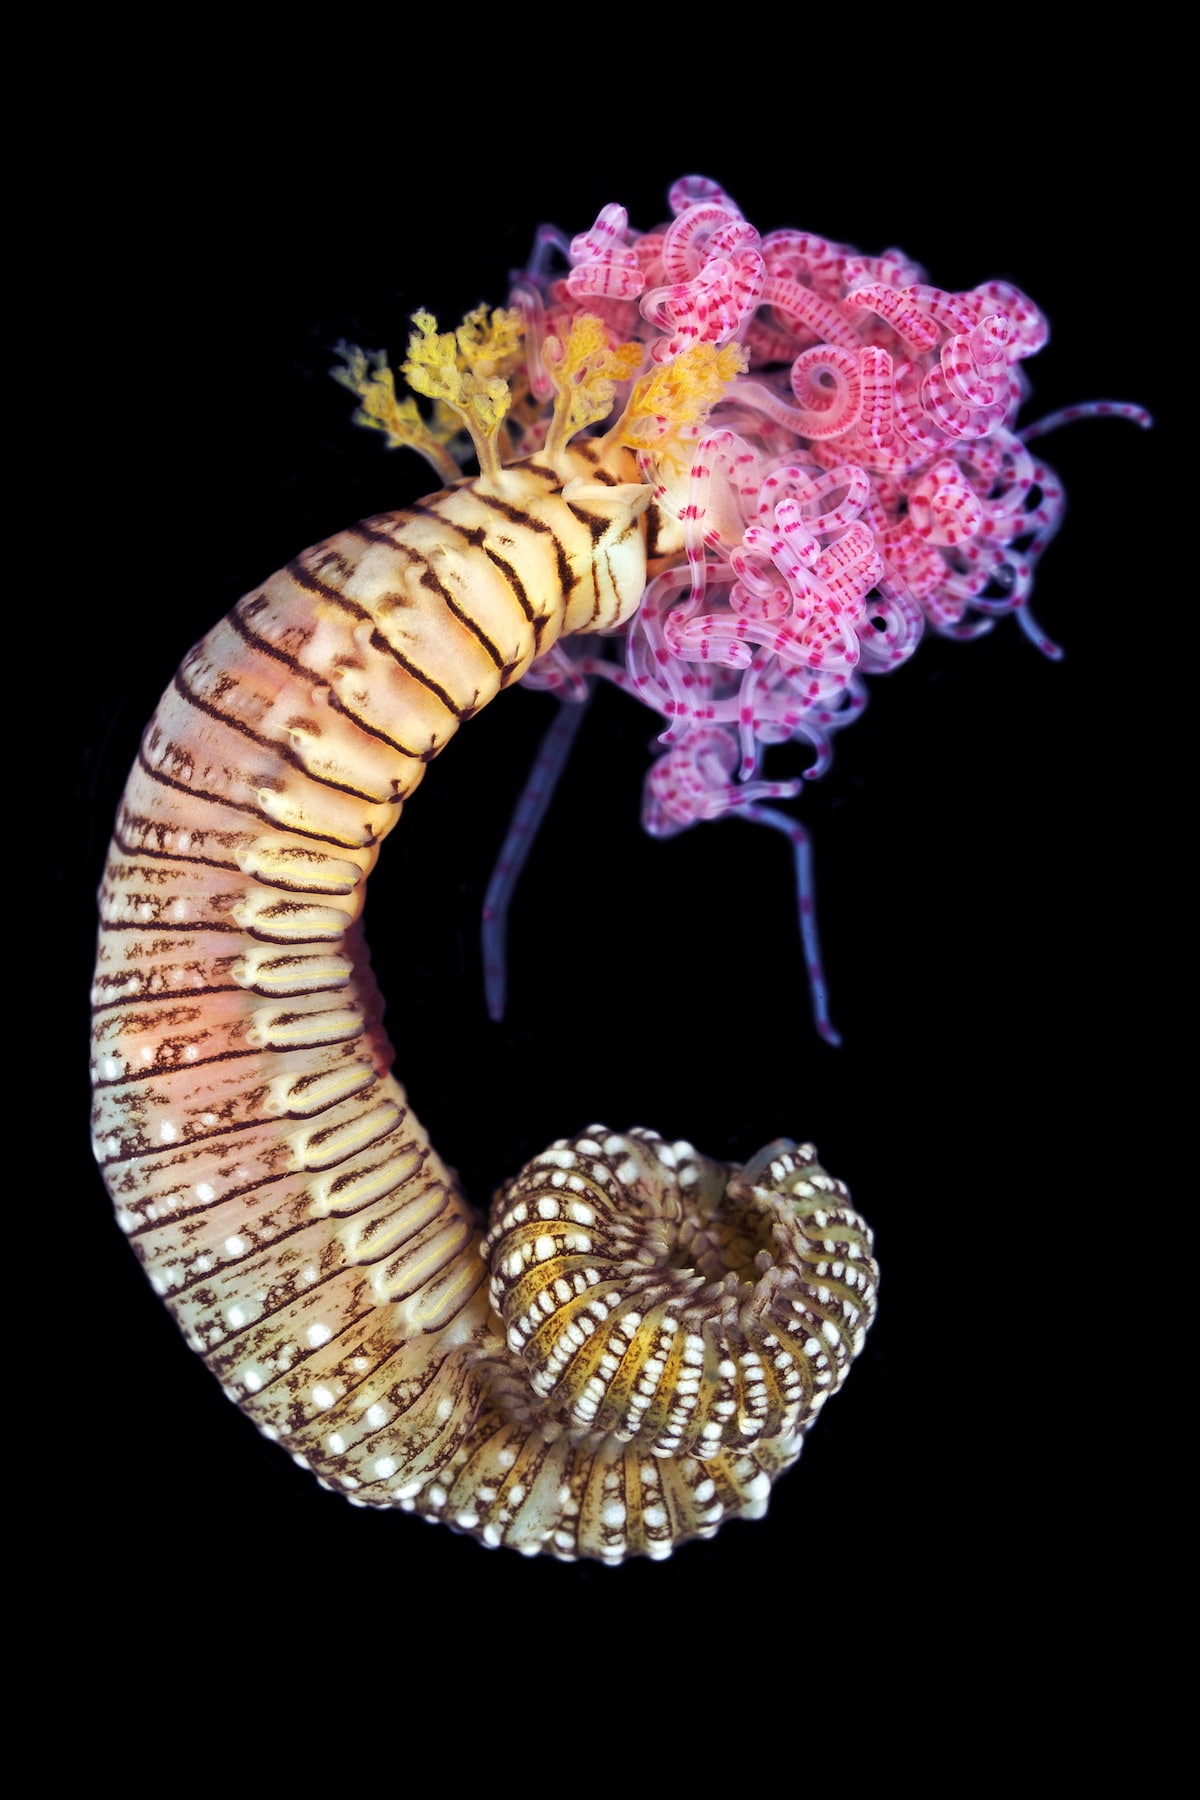 Alexander Semenov underwater photography Polychaete Terebellidae unidentified 2